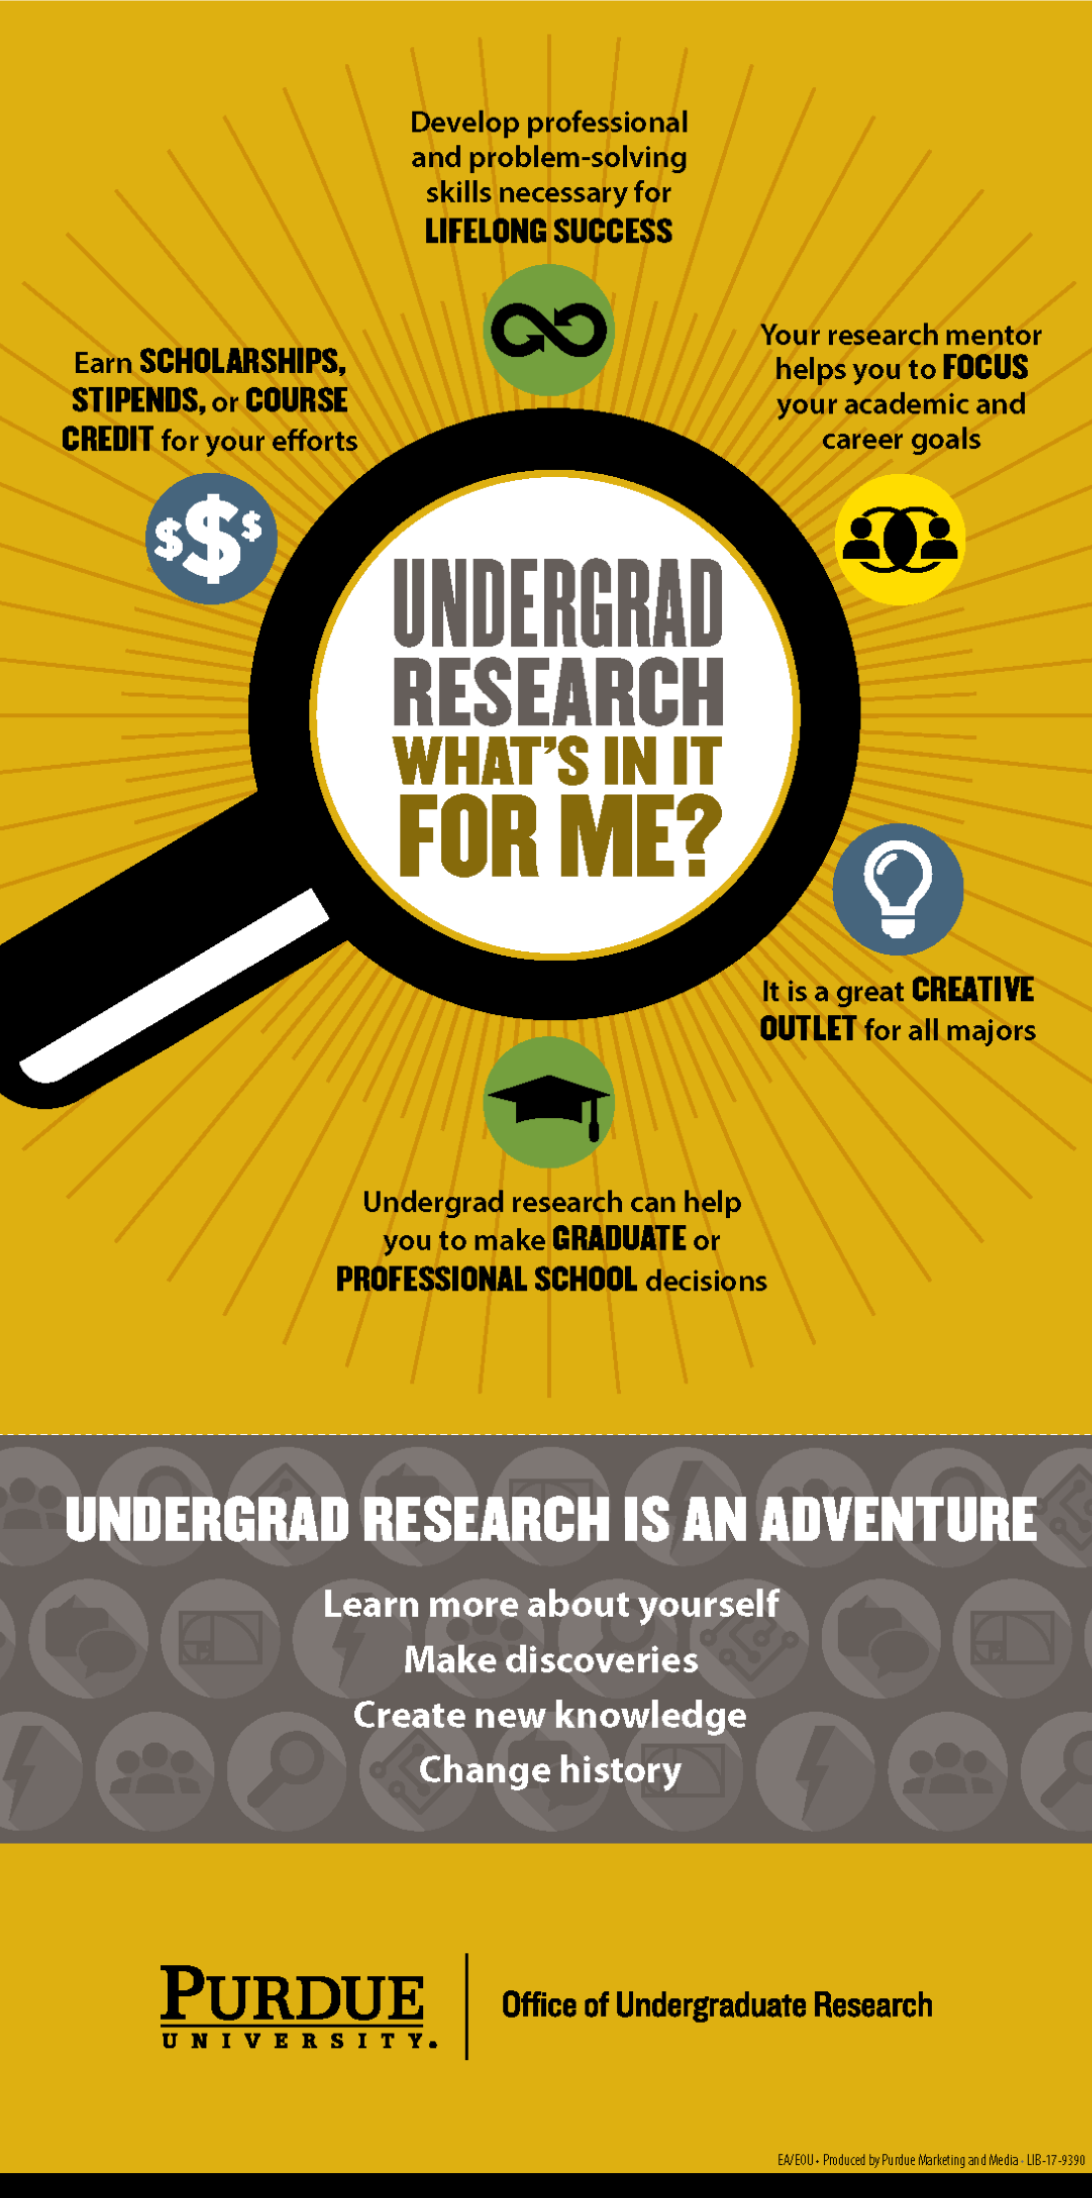 undergraduate research benefits